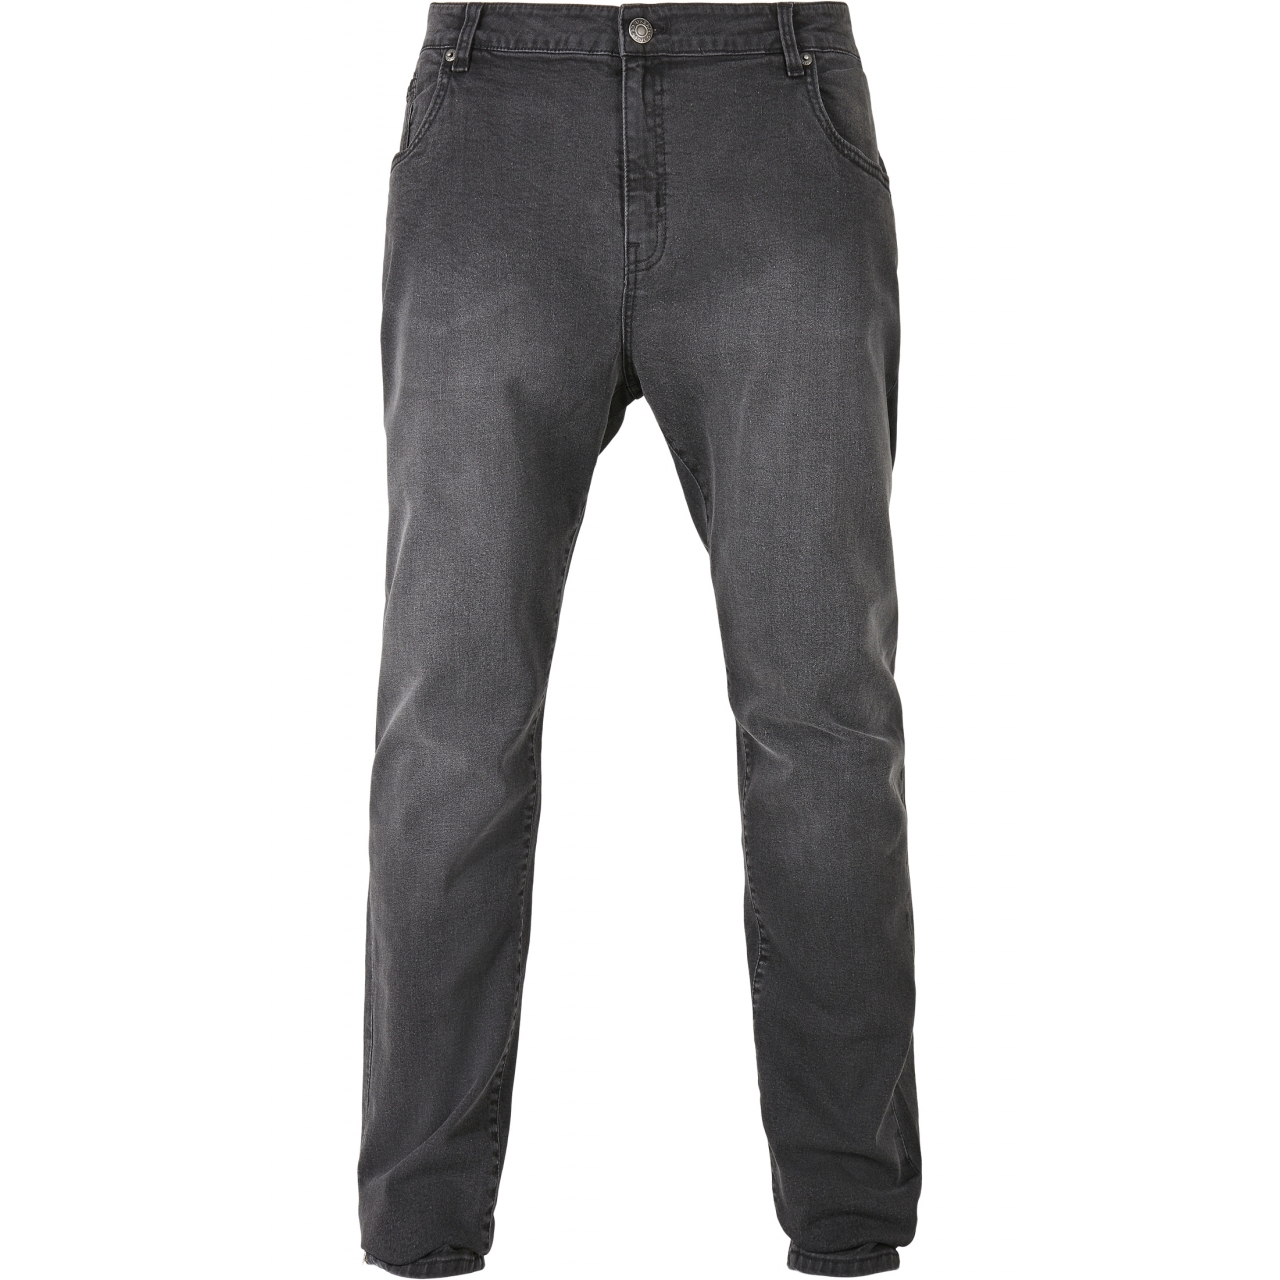 Džíny Urban Classics Slim Fit Zip Jeans - černé, 32/34